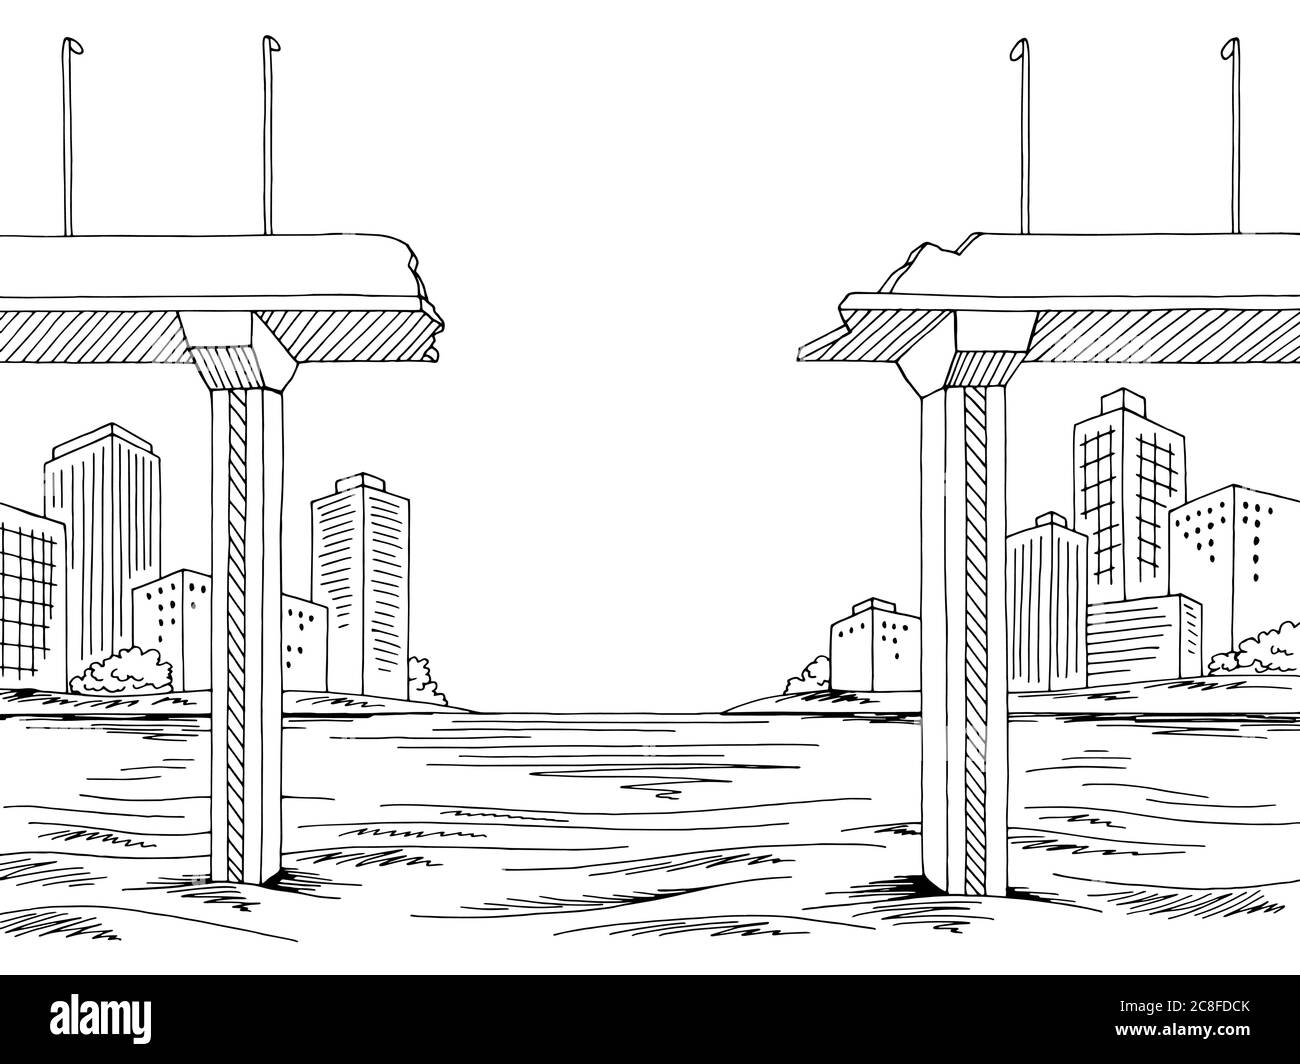 Gebrochene Brücke Grafik schwarz weiß Landschaft Stadt Skizze Illustration Vektor Stock Vektor